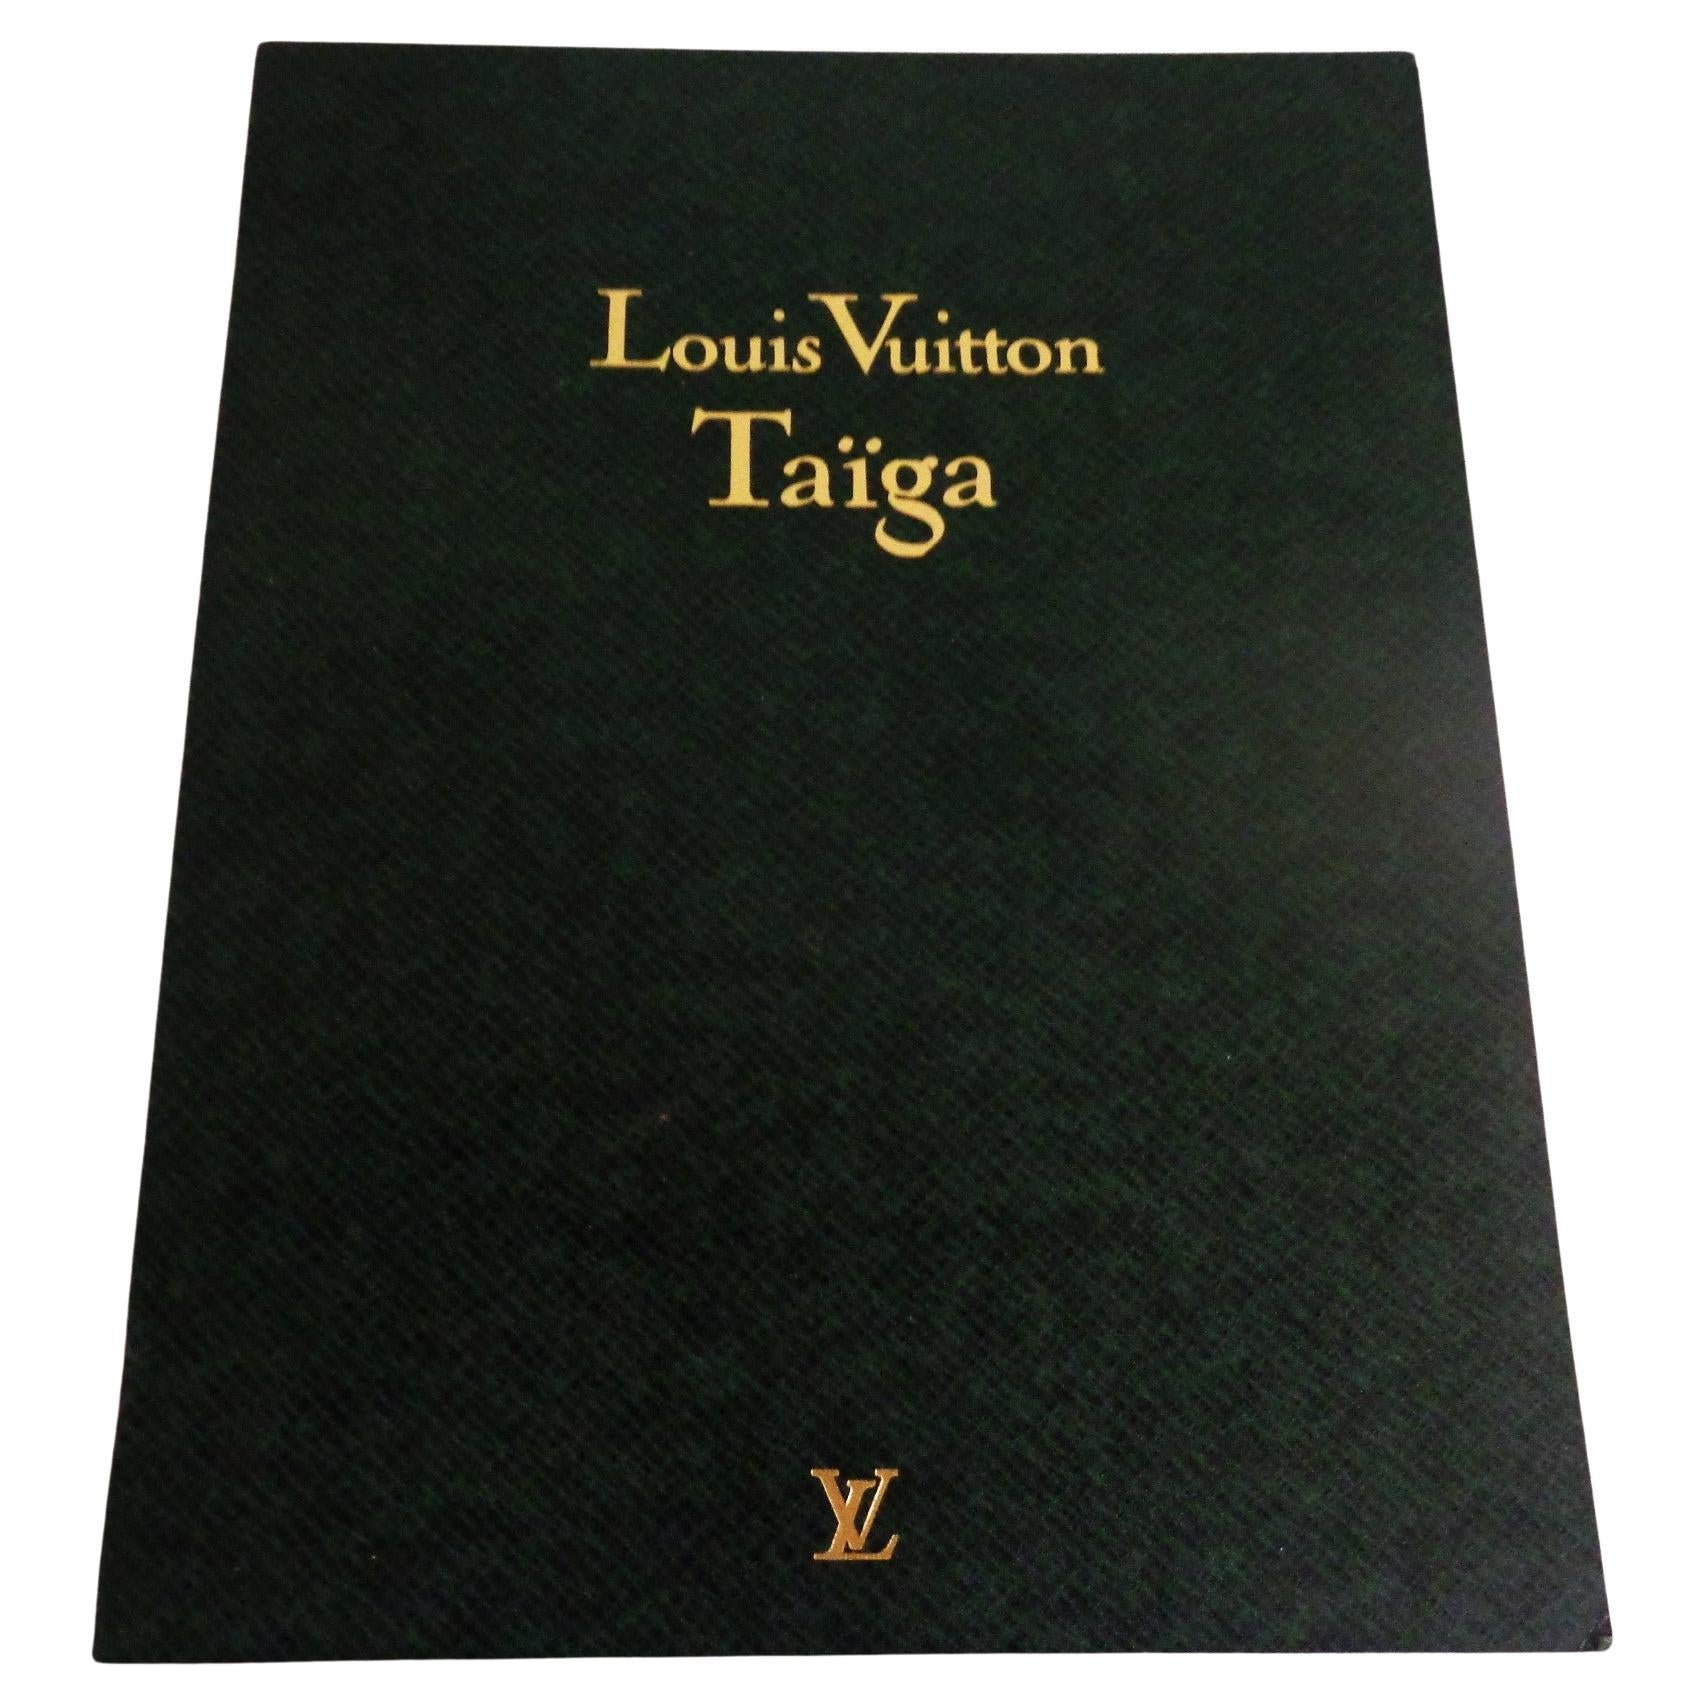 Le catalogue - Louis Vuitton w/ Price List & Taiga Pamphlet - 1993 Number 1  For Sale 12